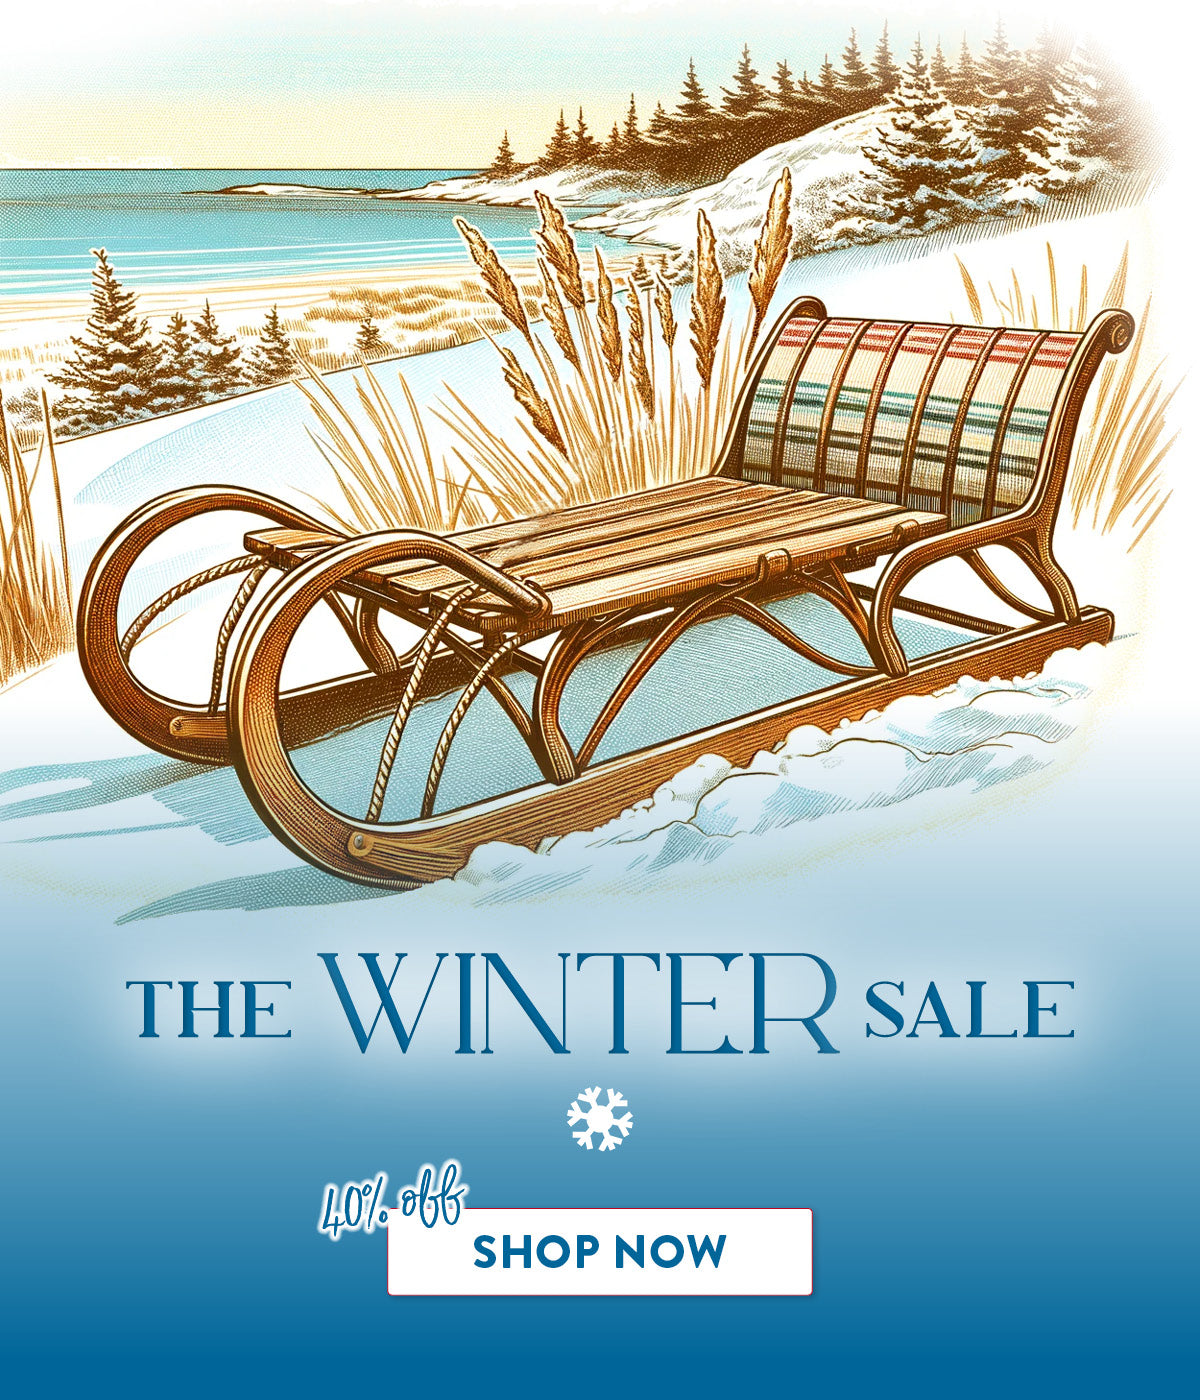 The Winter Sale